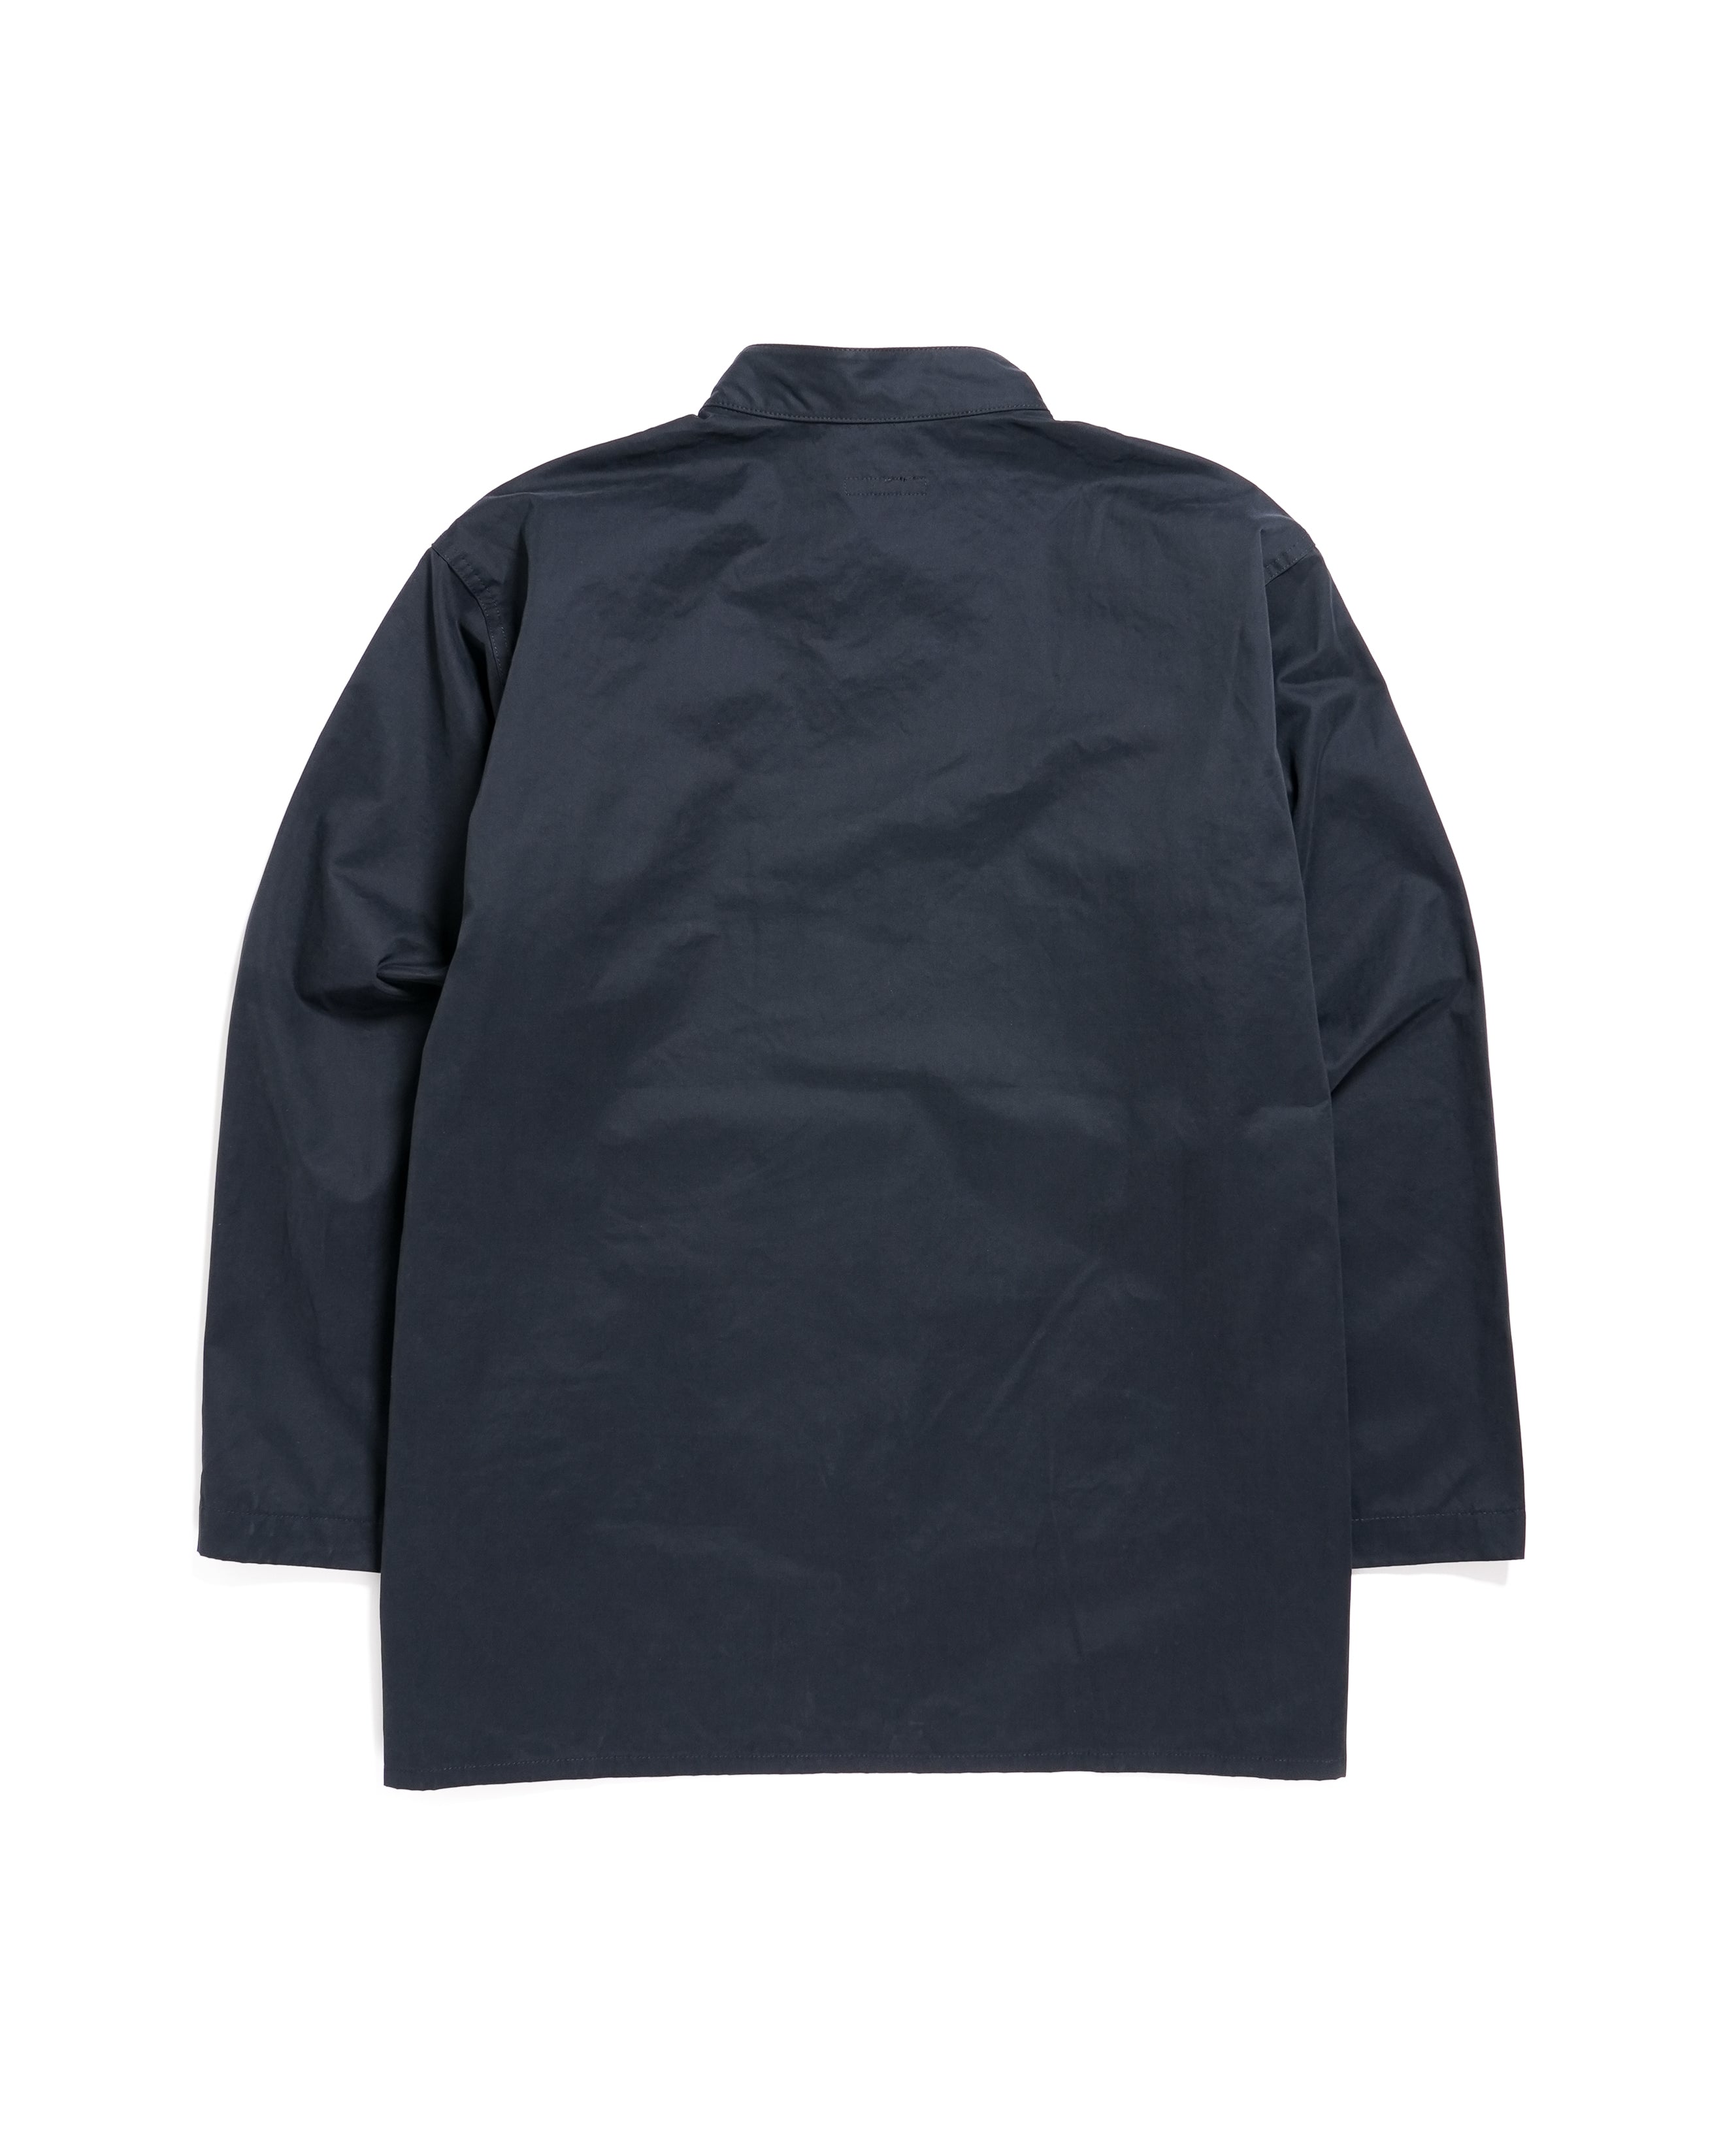 Dayton Shirt - Dk. Navy PC Coated Cloth - NNY SP